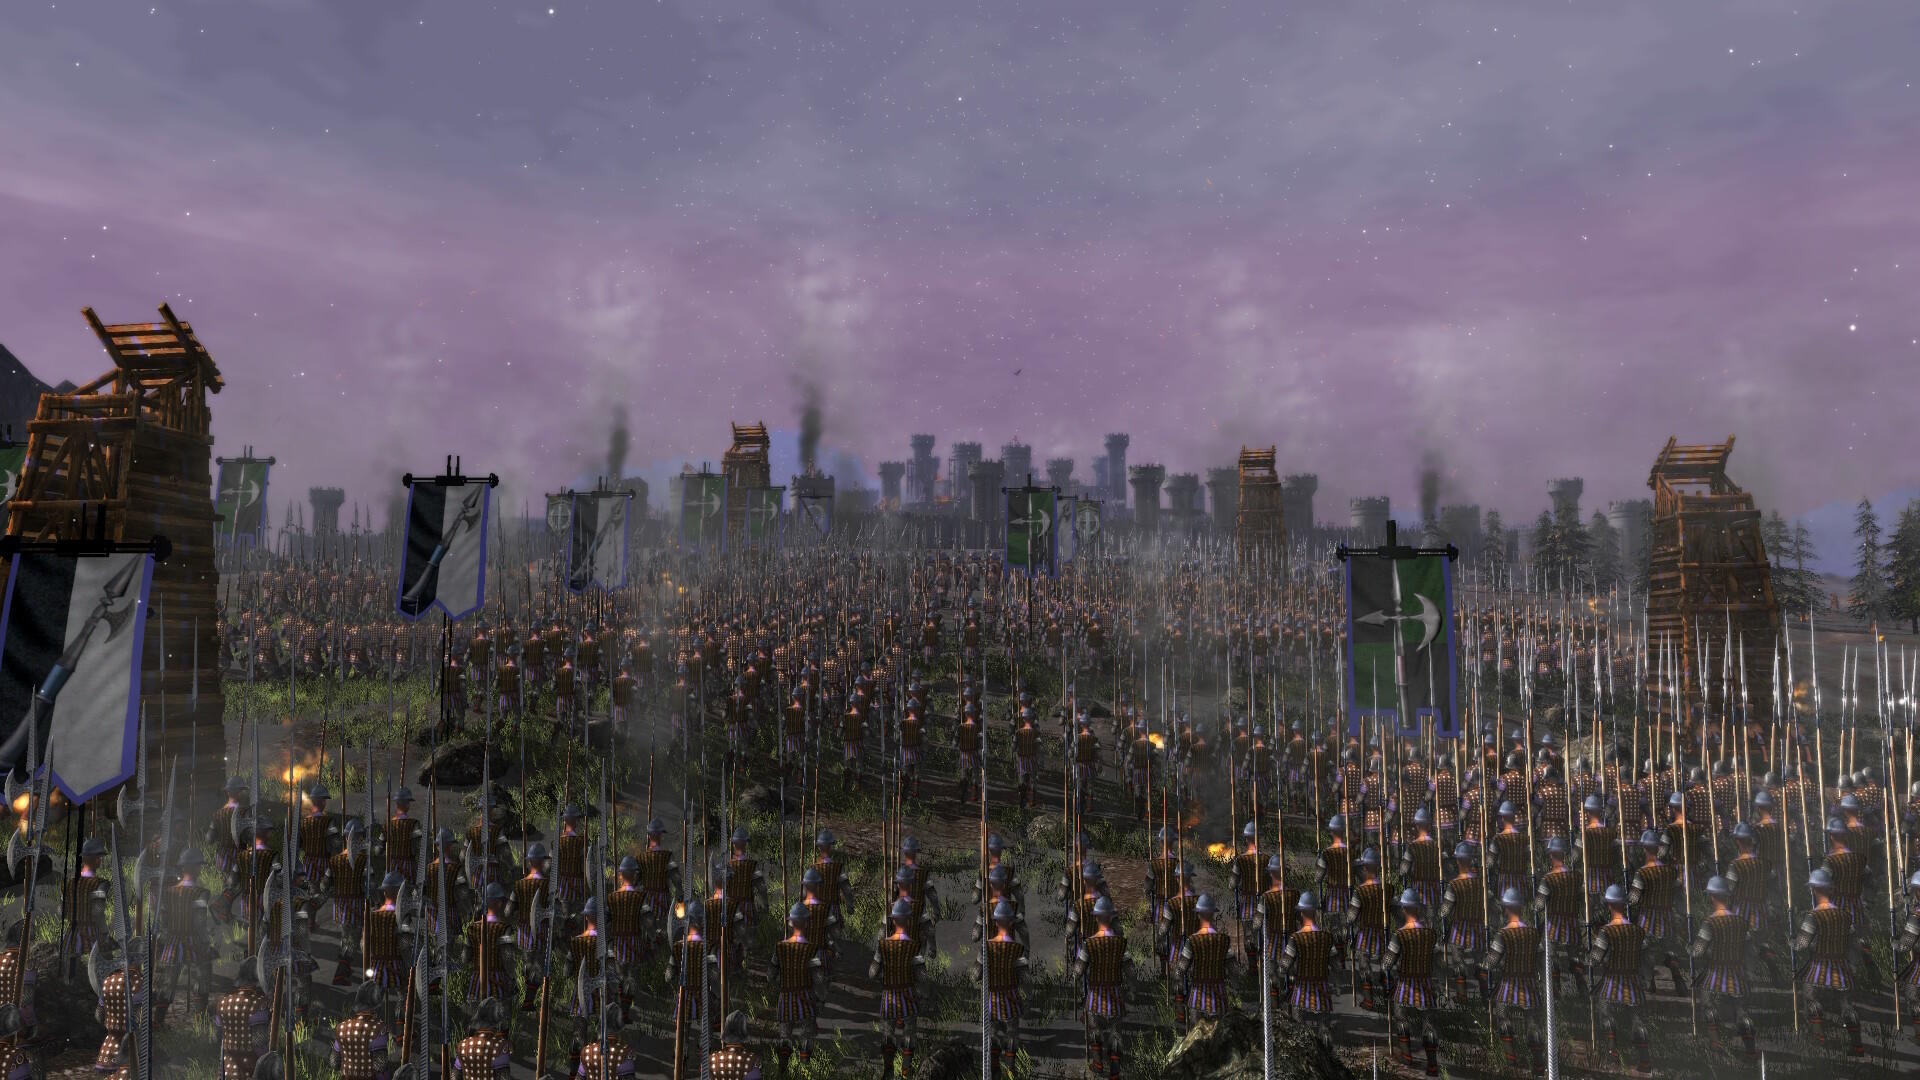 Renaissance Kingdom Wars - Prologue screenshot game